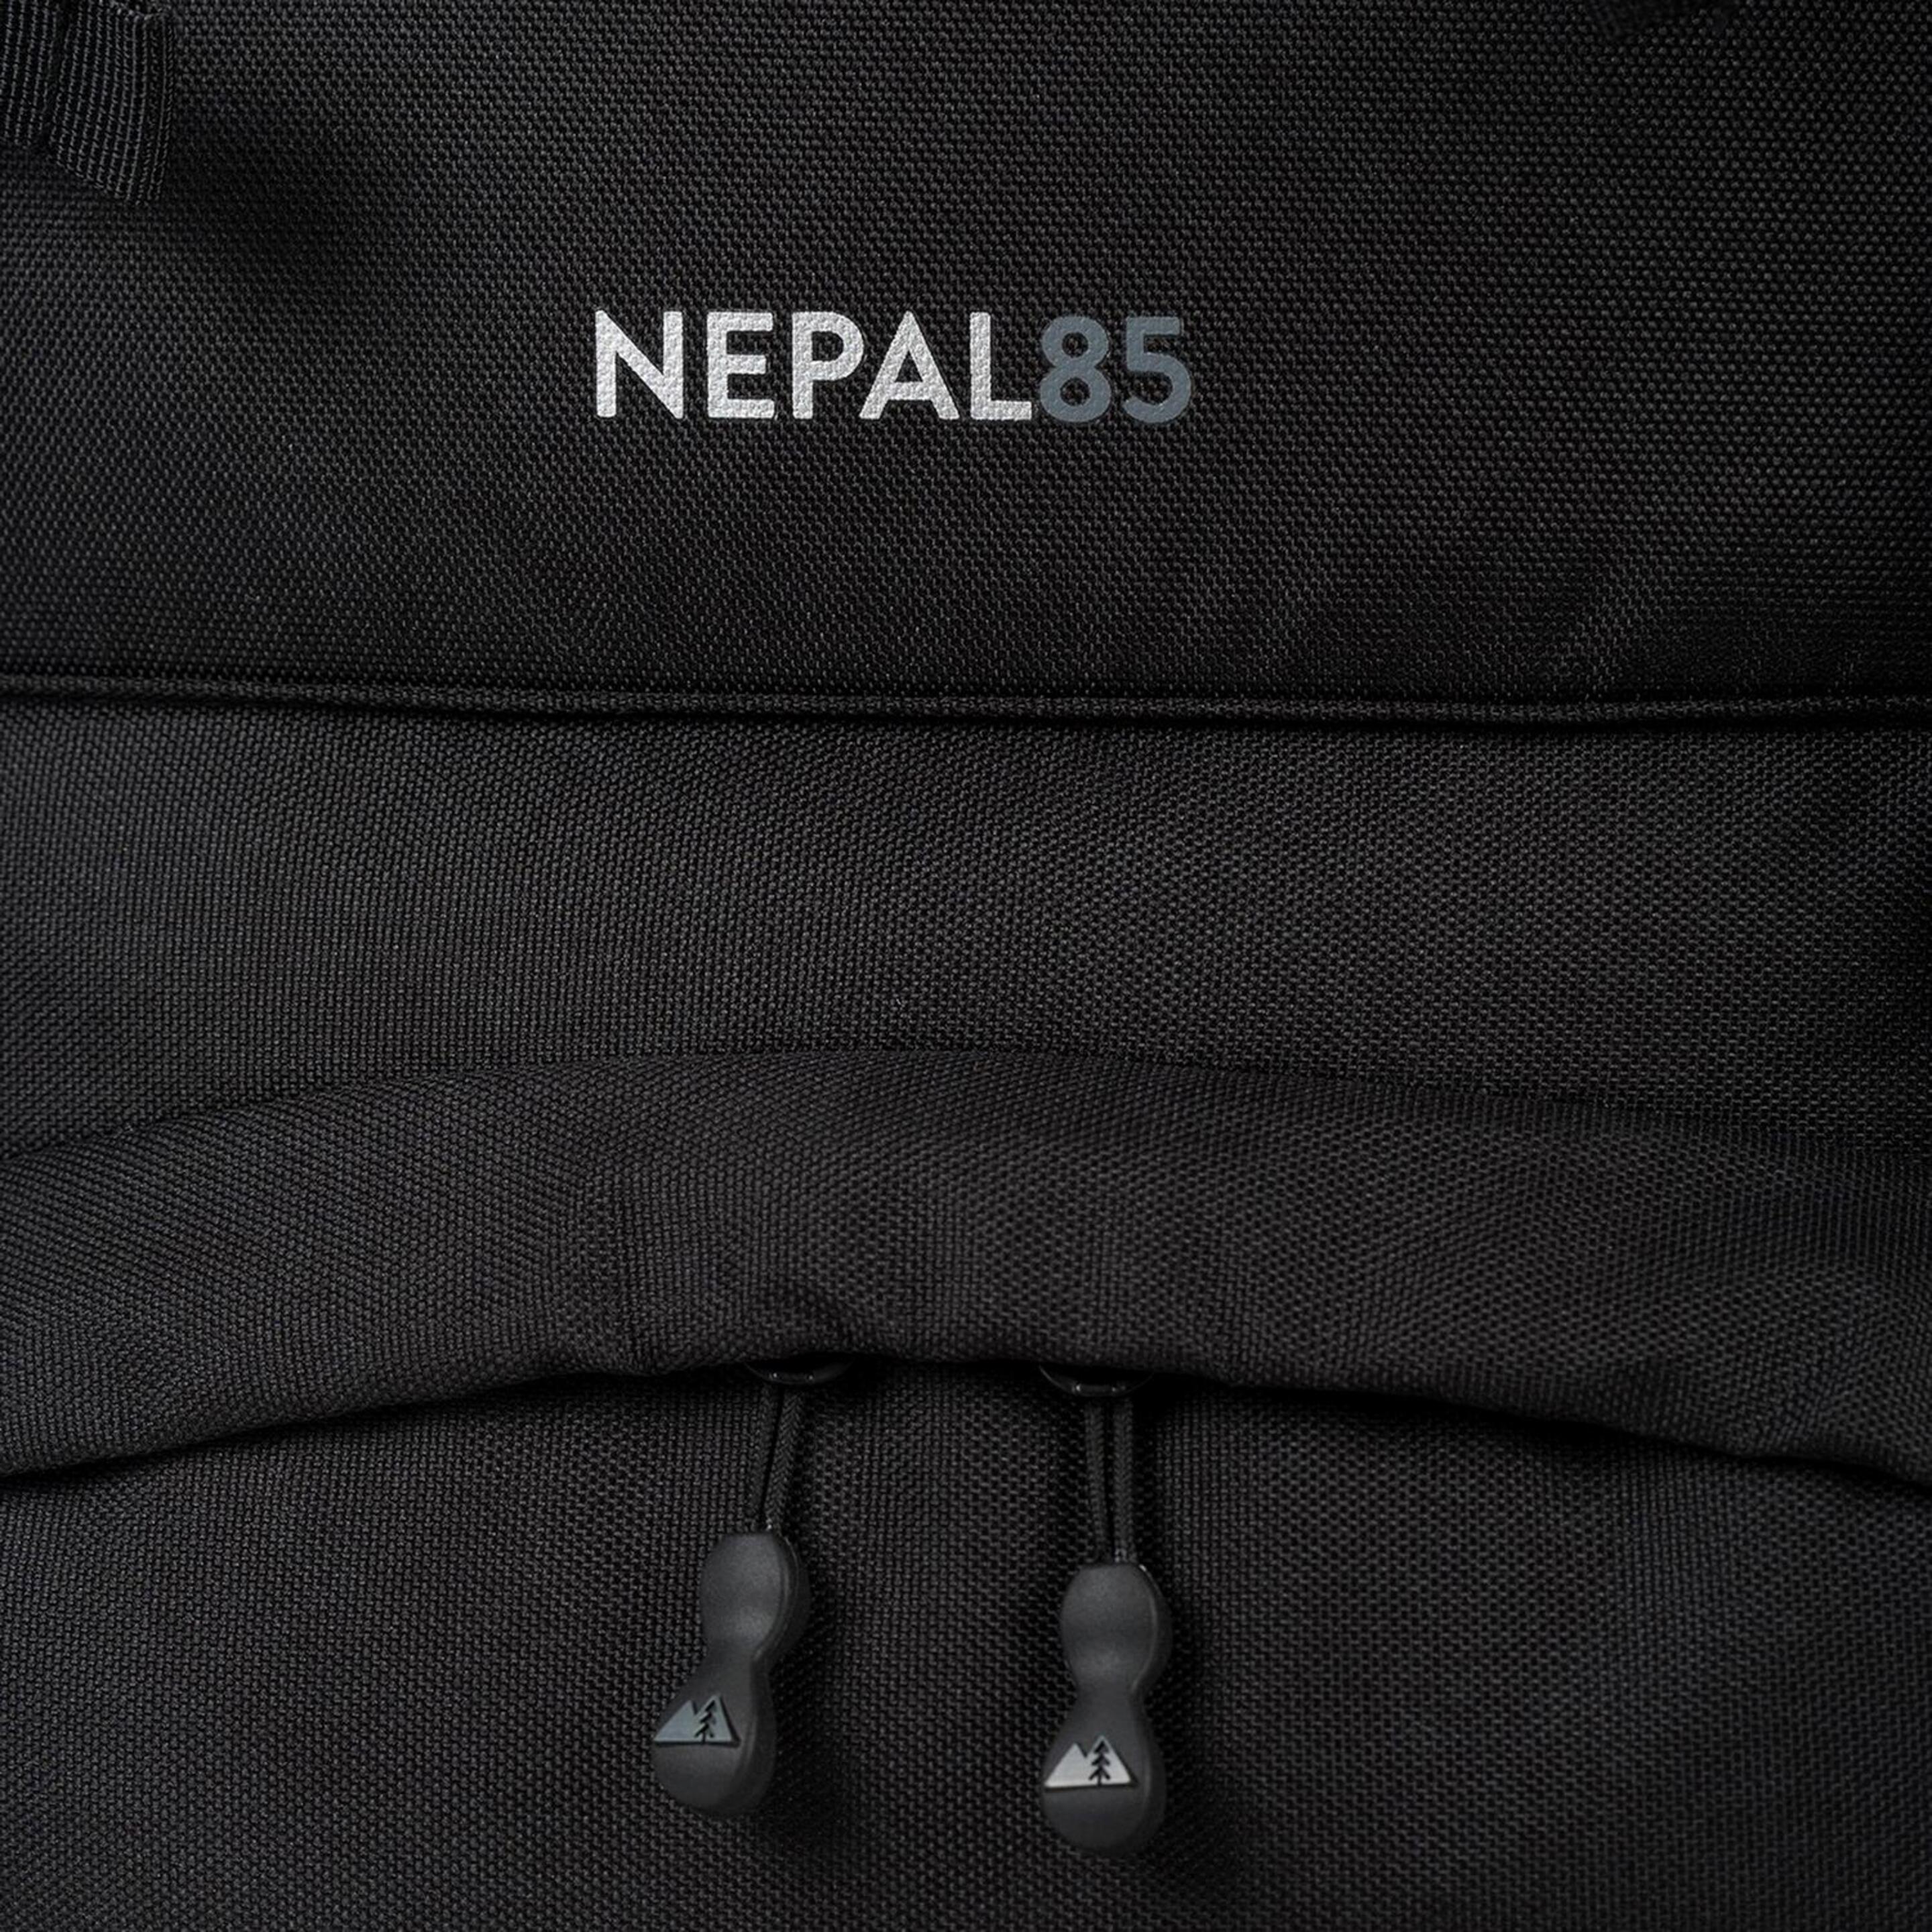 Eh Nepal 85 Blk 351871